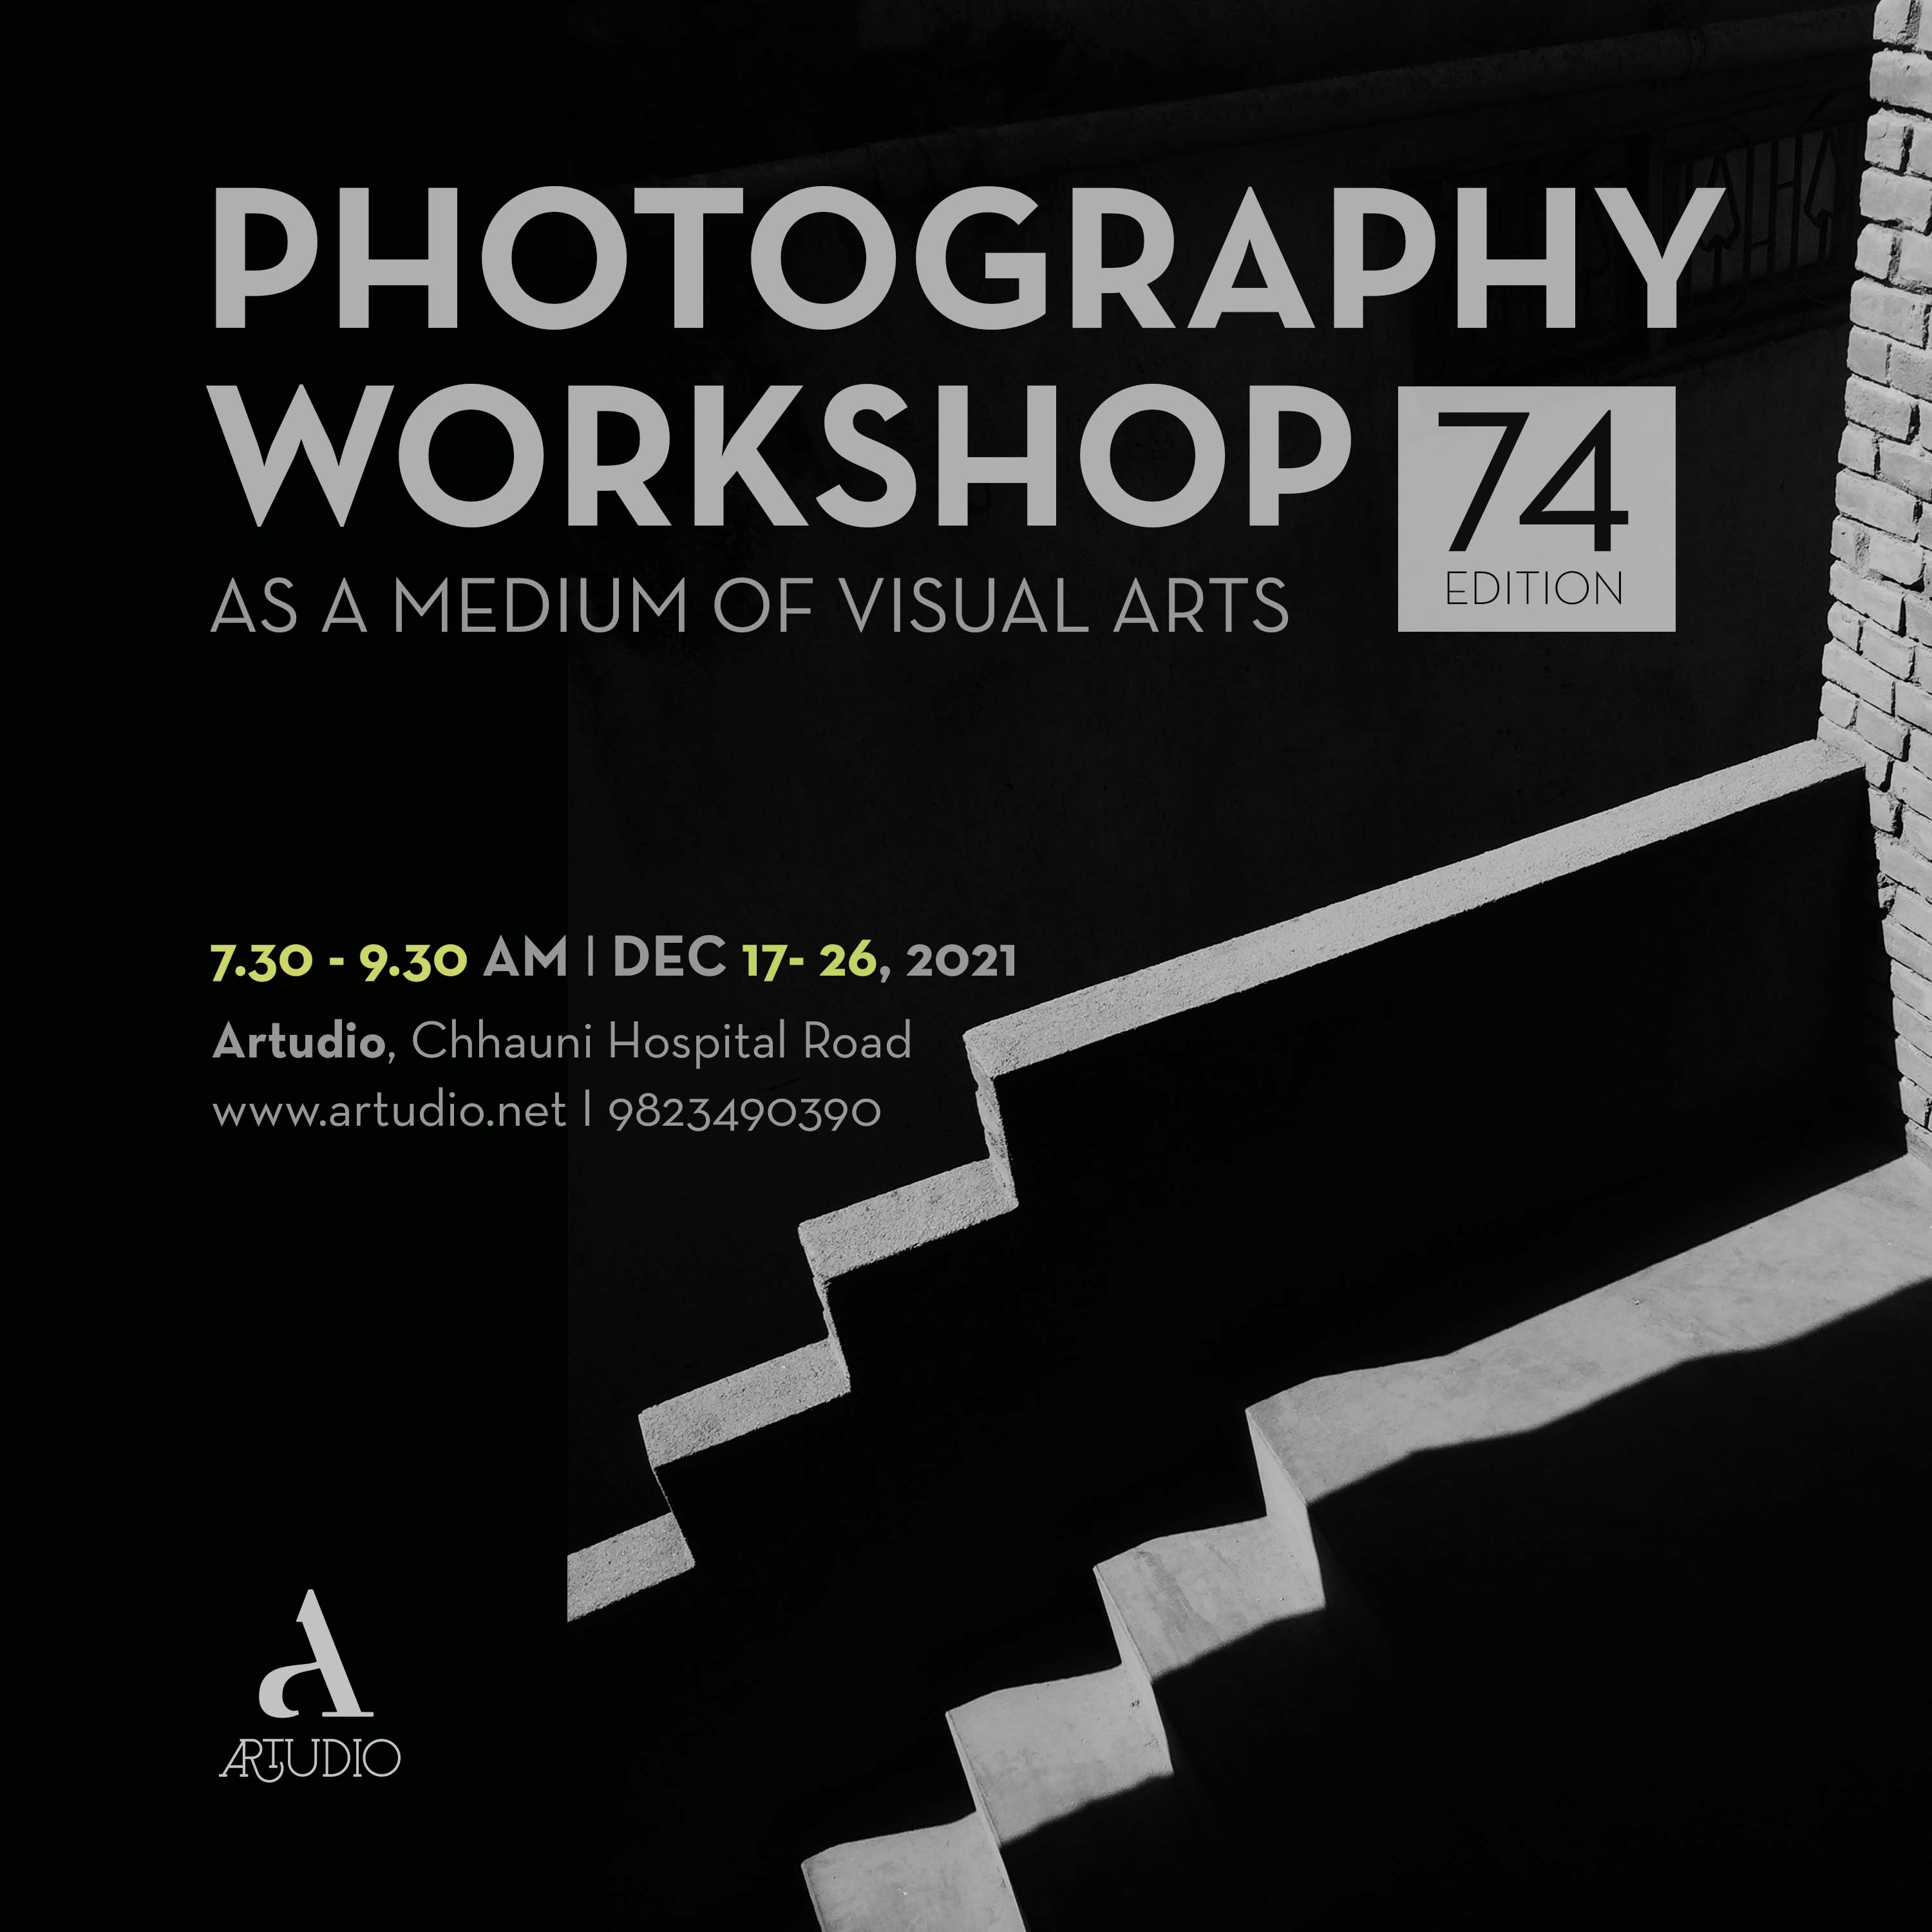 PHOTOGRAPHY WORKSHOP, AS A MEDIUM OF VISUAL ARTS (74th Edition) post thumbnail image